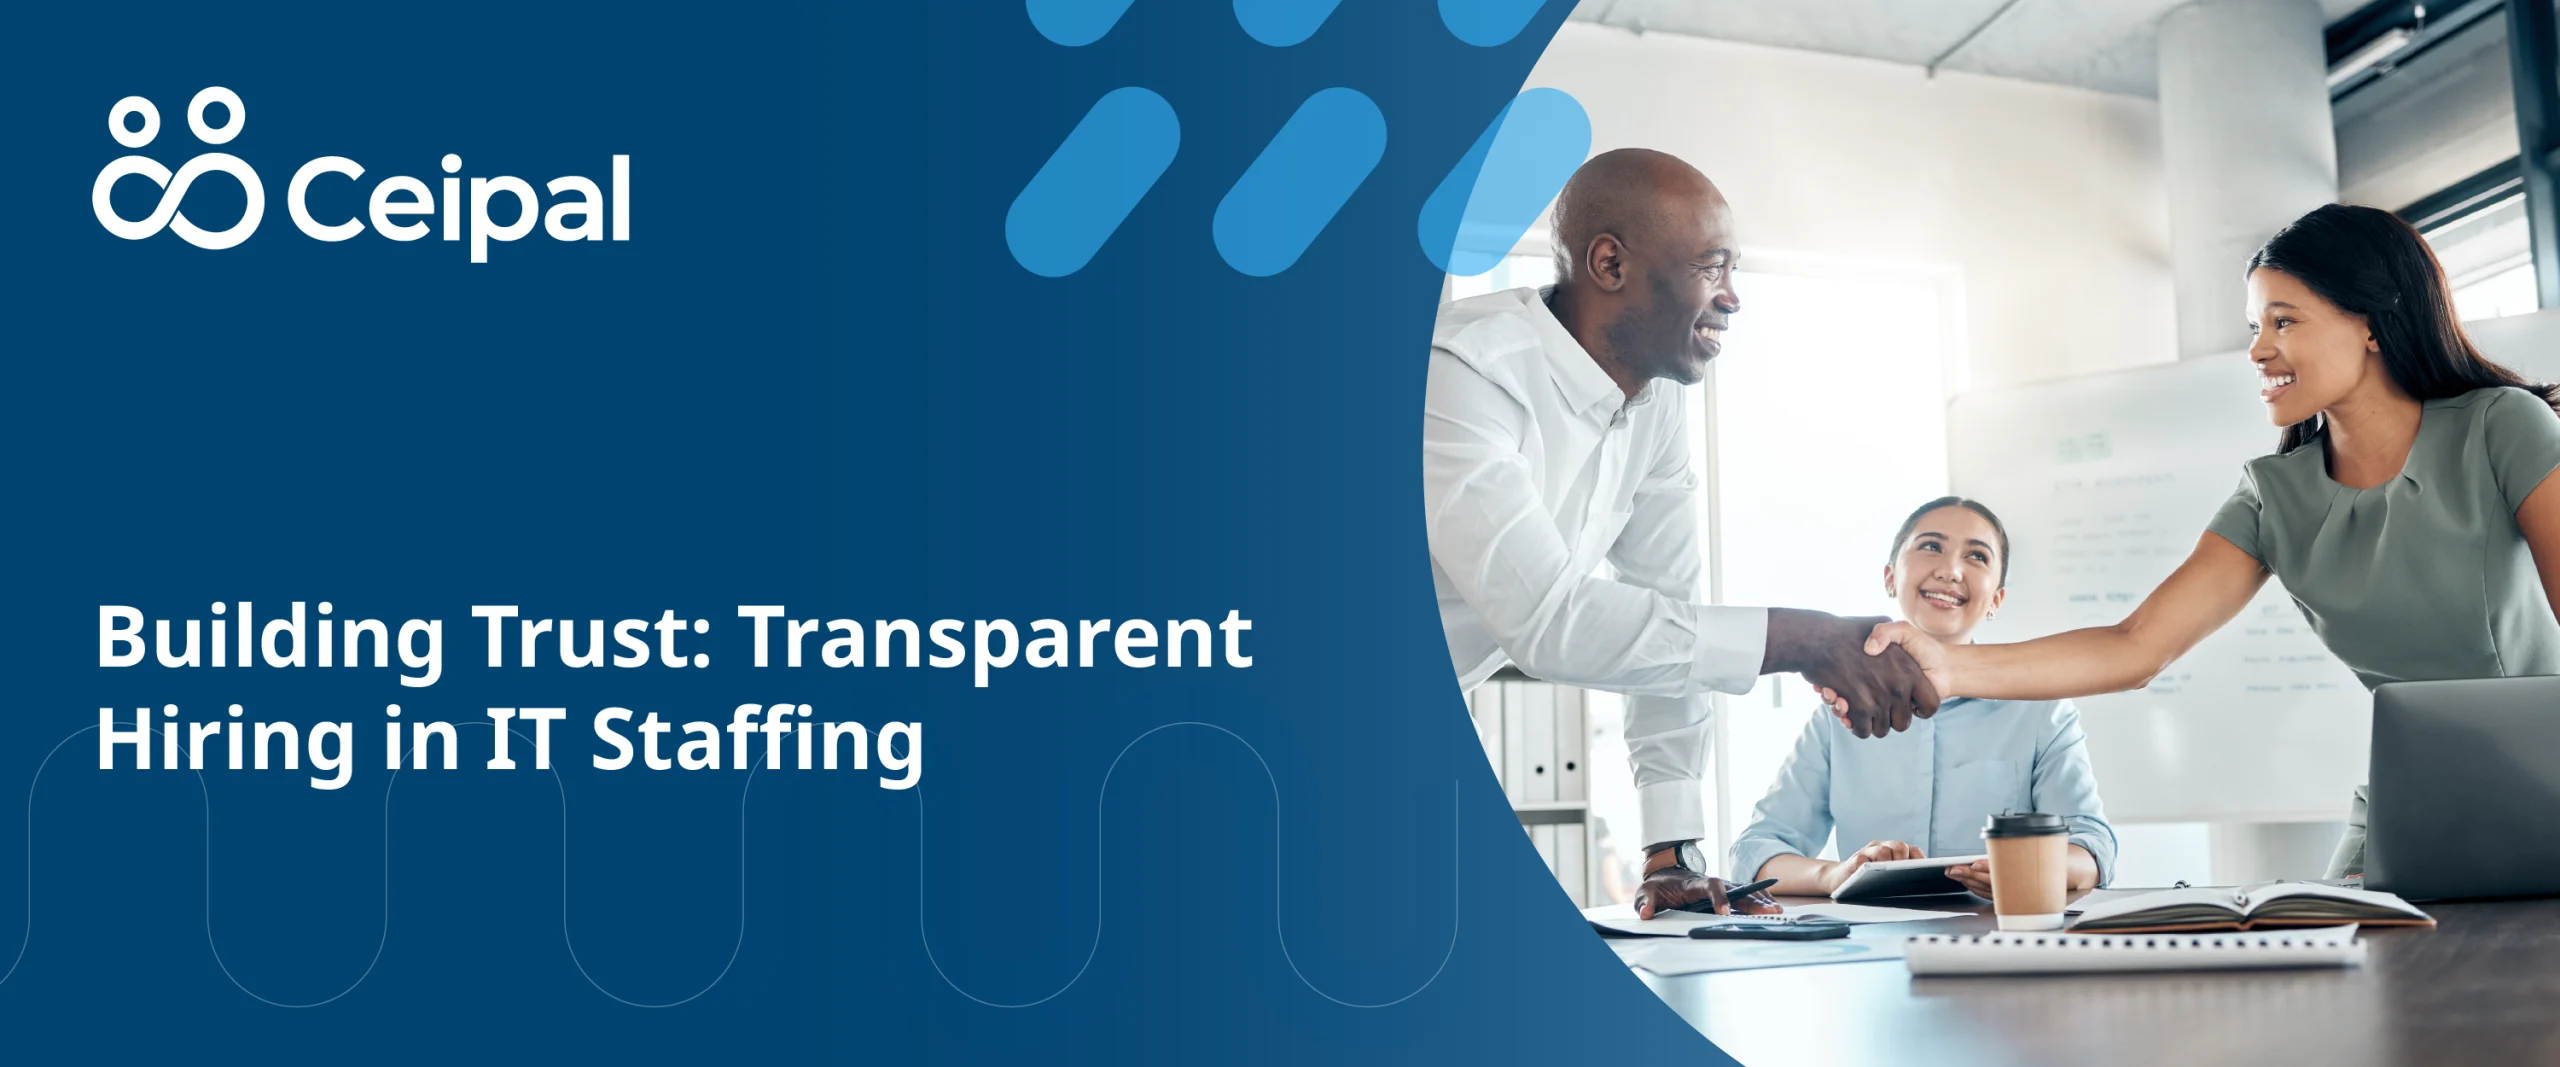 Building Trust: Transparent Hiring in IT Staffing